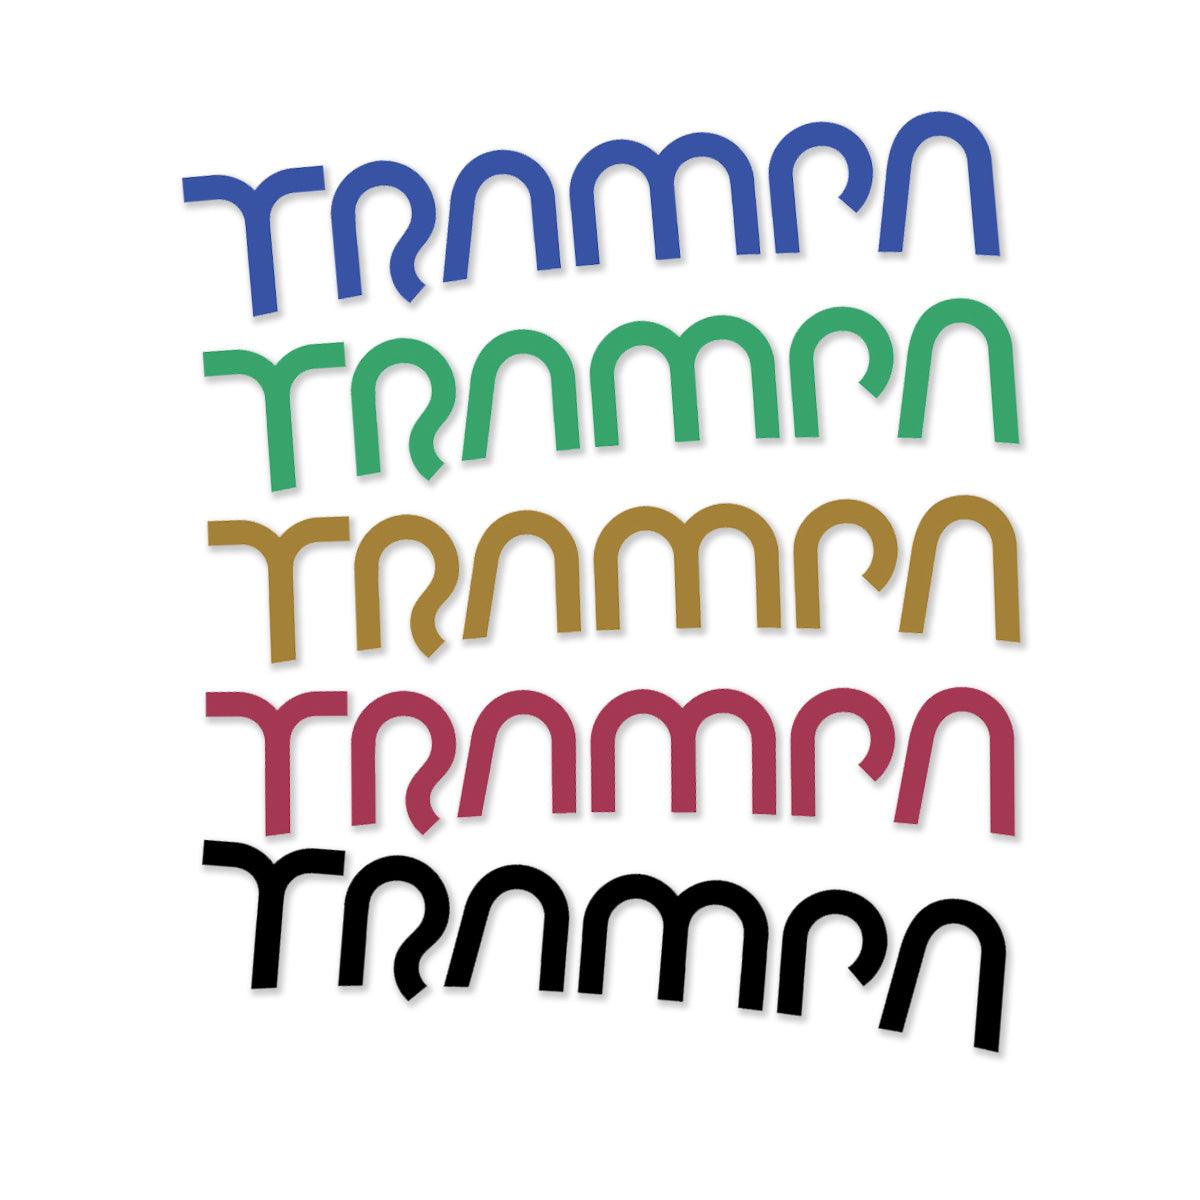 Trampa Die-Cut Vinyl Board Stickers - Kiteshop.com